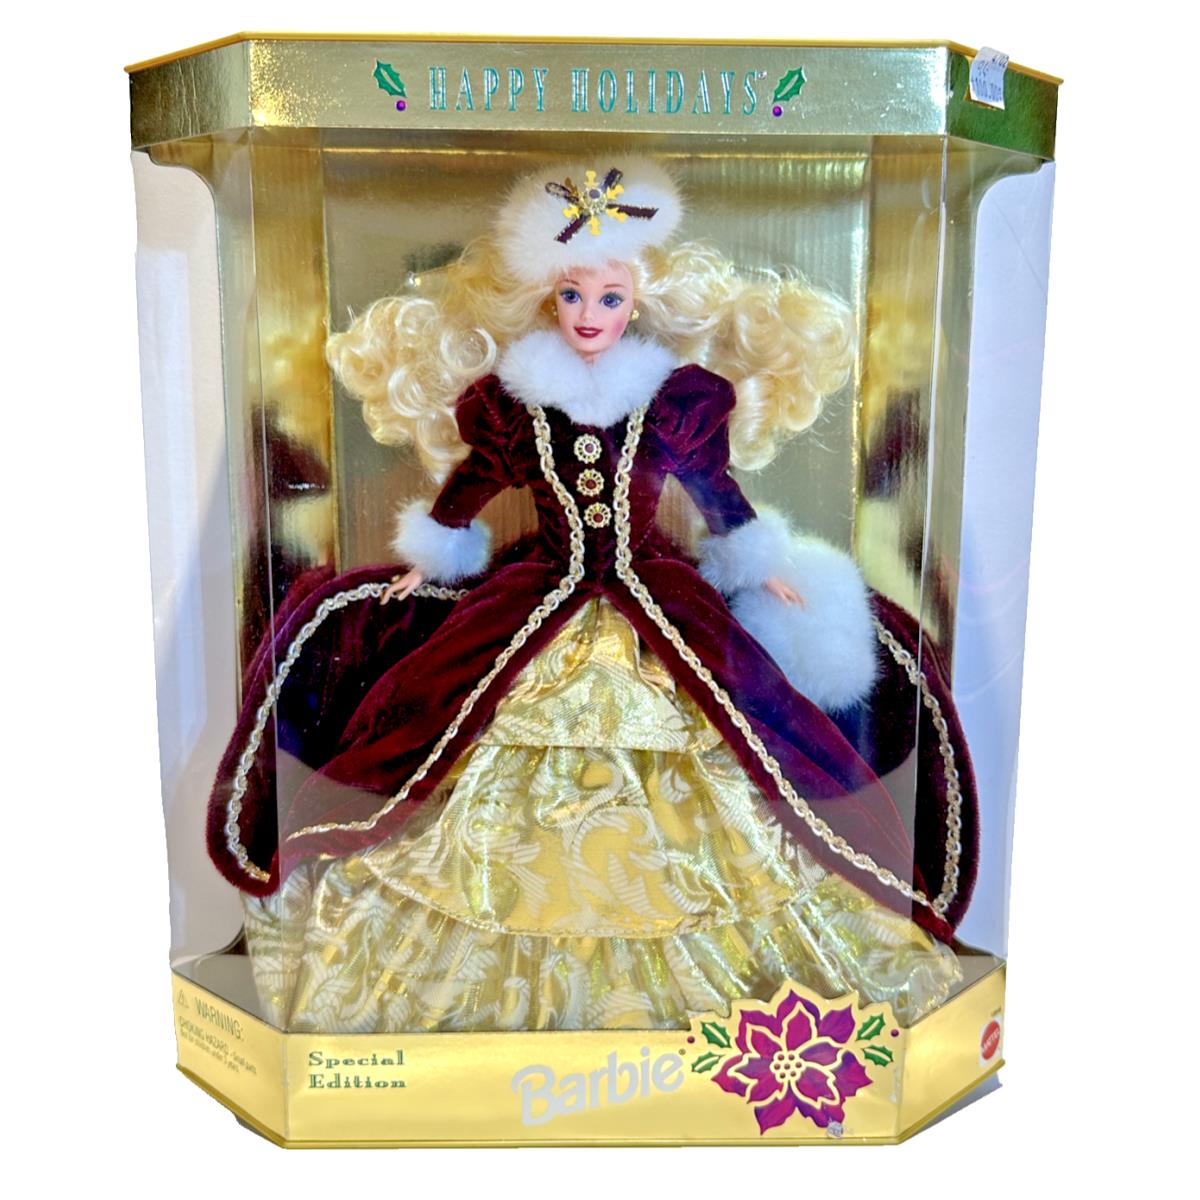 1996 Happy Holidays Barbie Doll Special Edition Mib Mattel 15646 Christmas